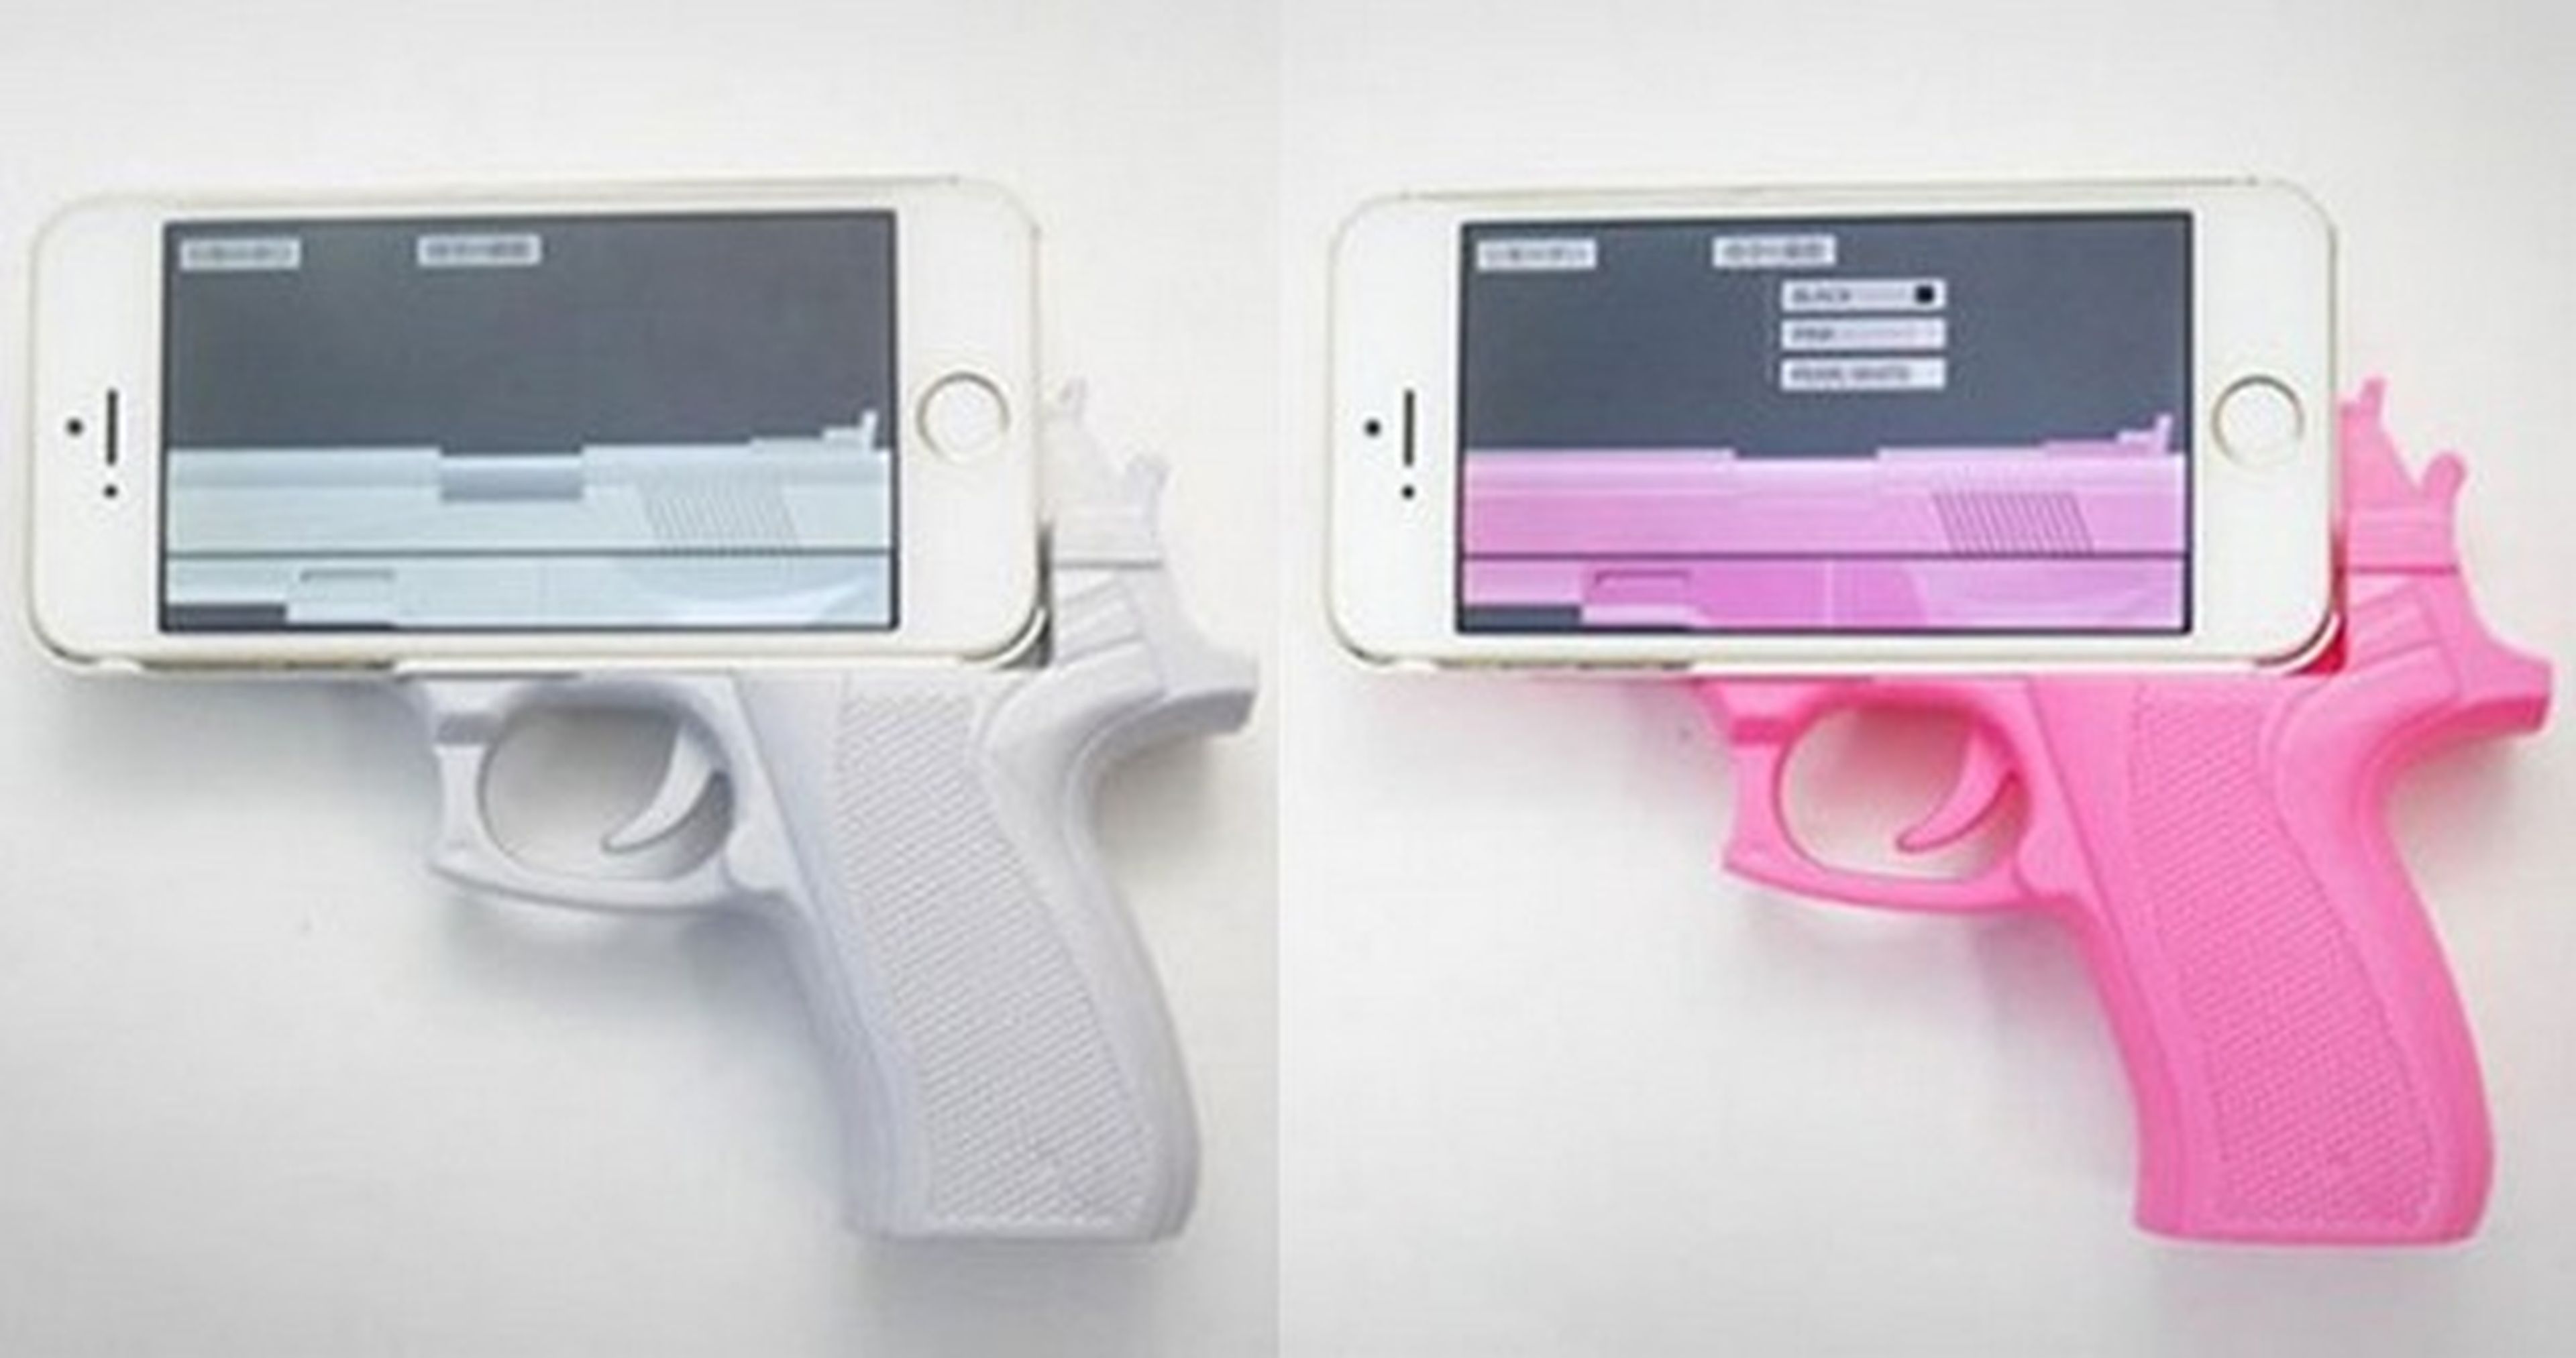 Funda de pistola iPhone 6